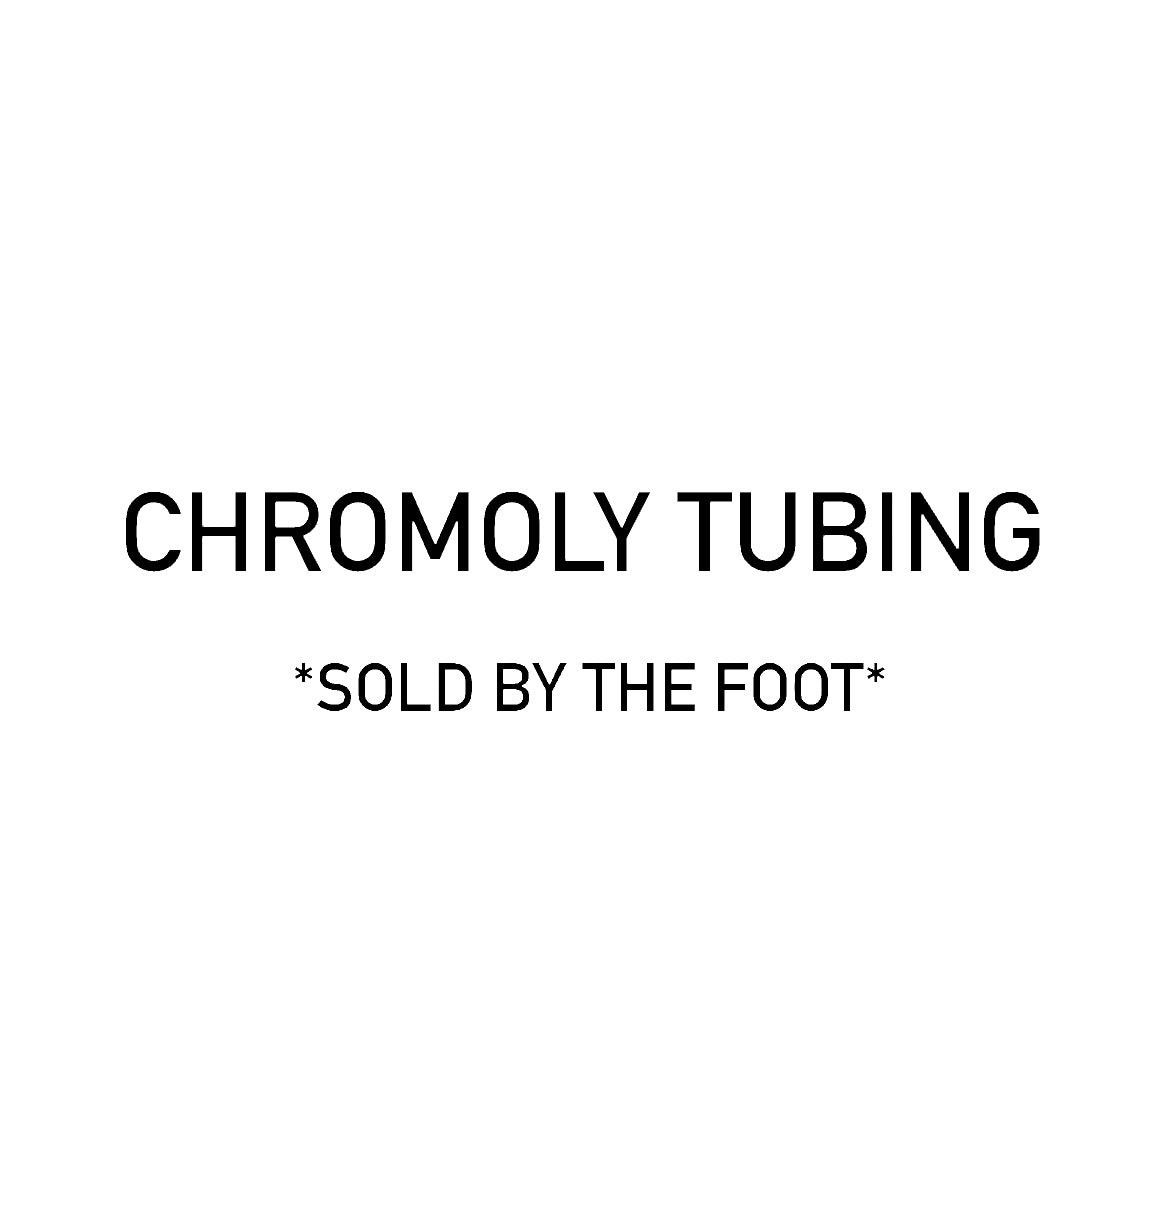 1.25 x .058 chromoly tubing per foot